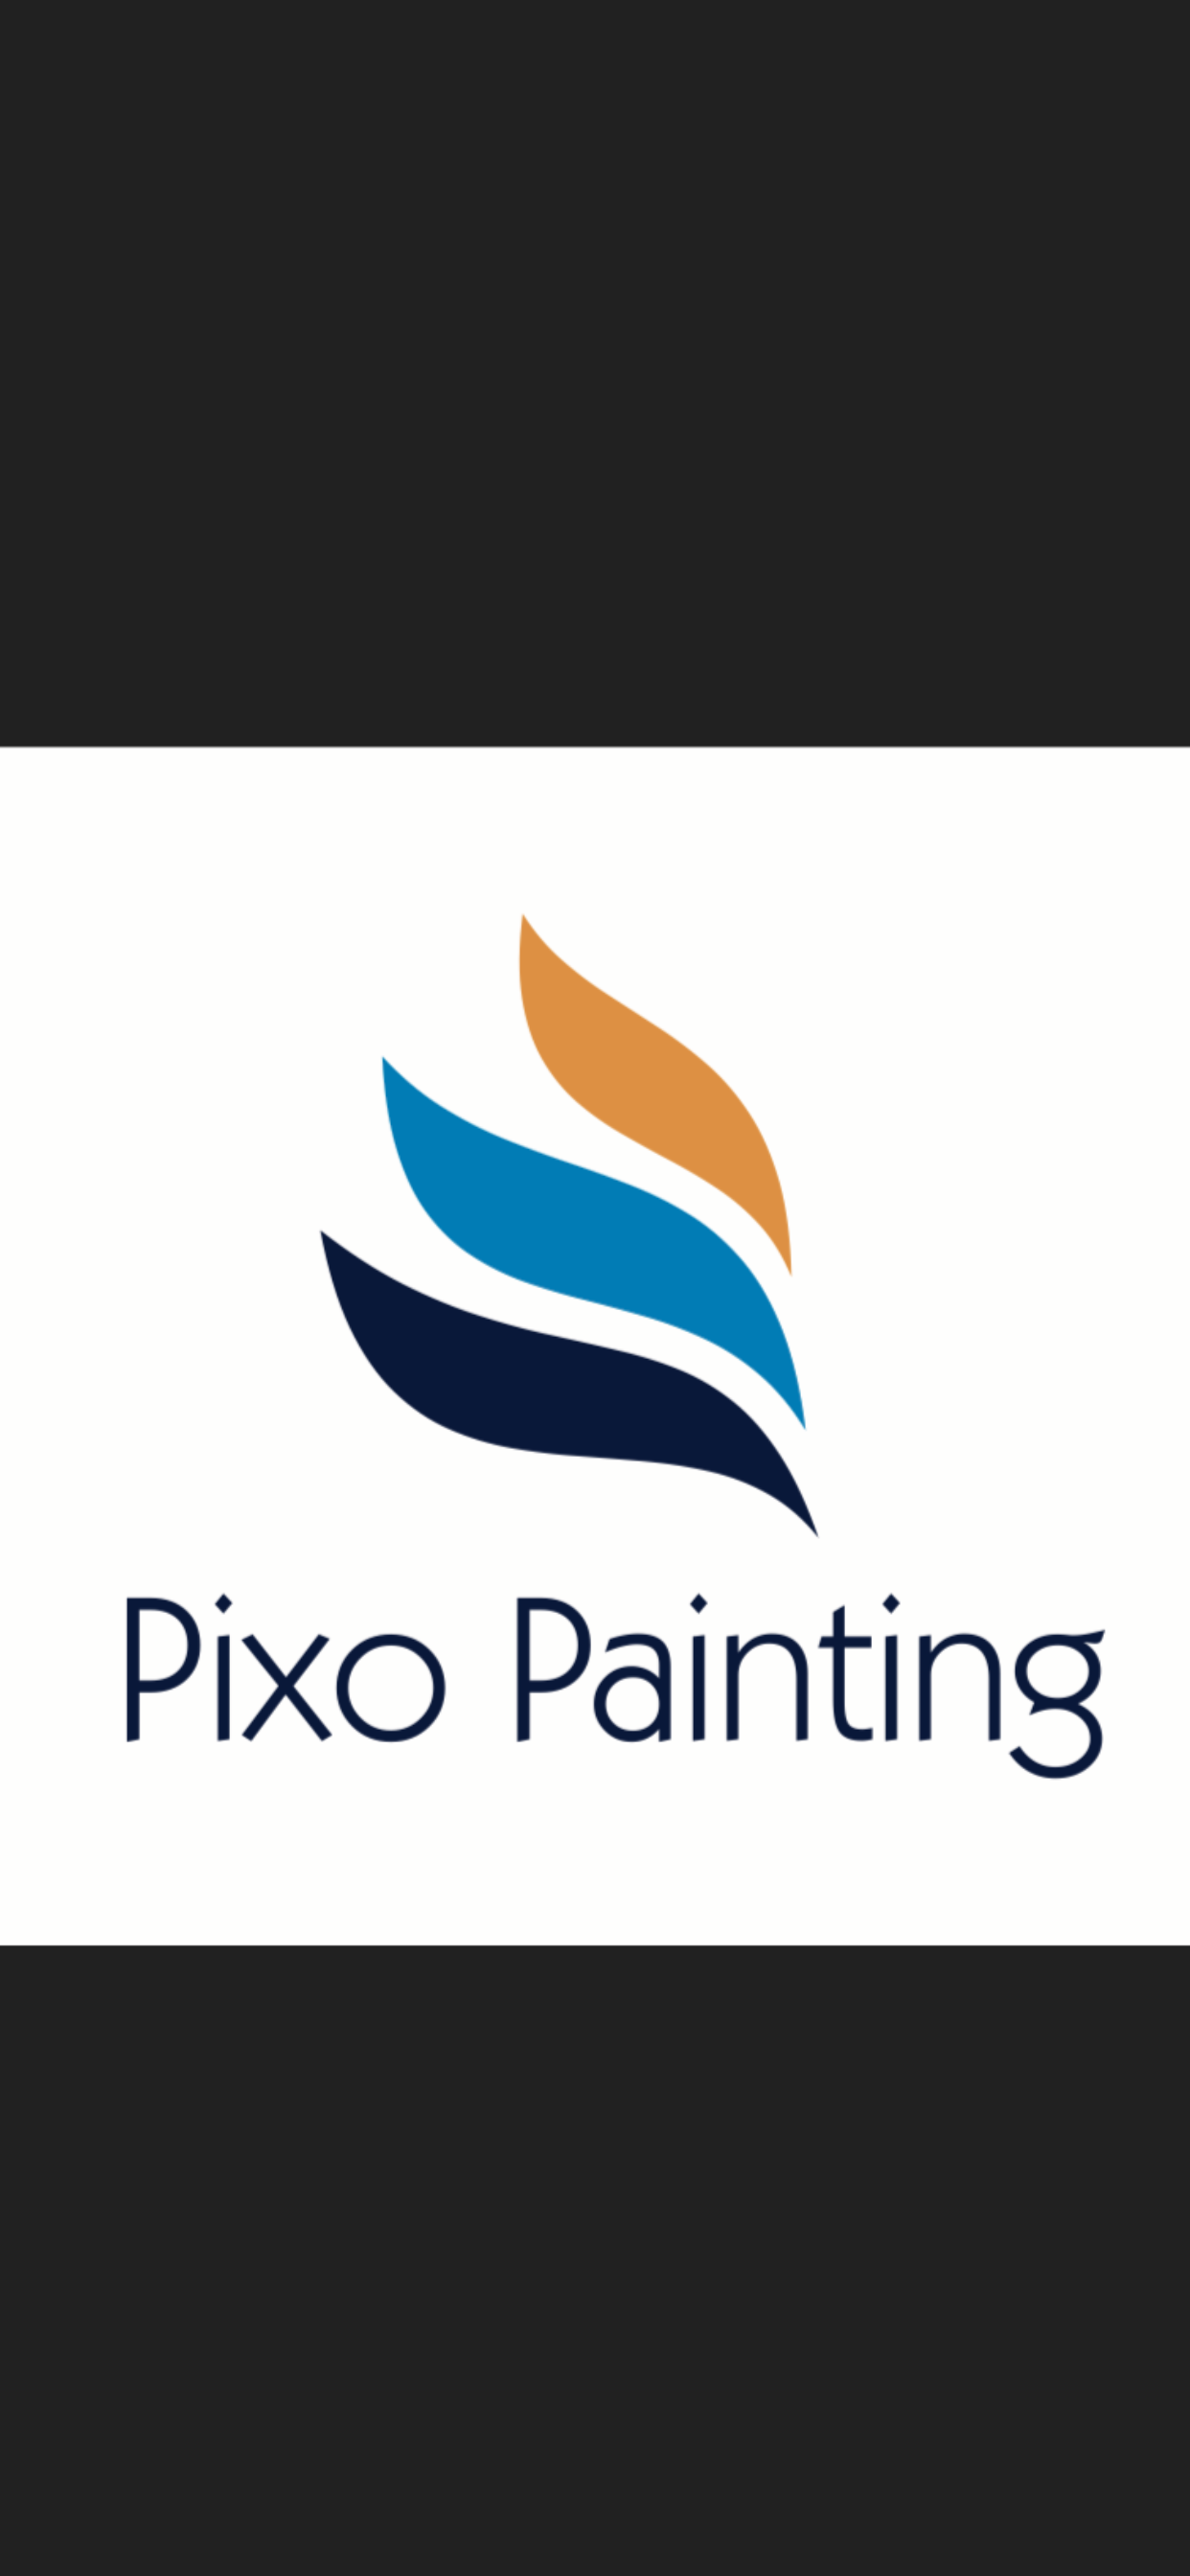 Pixo Painting Services